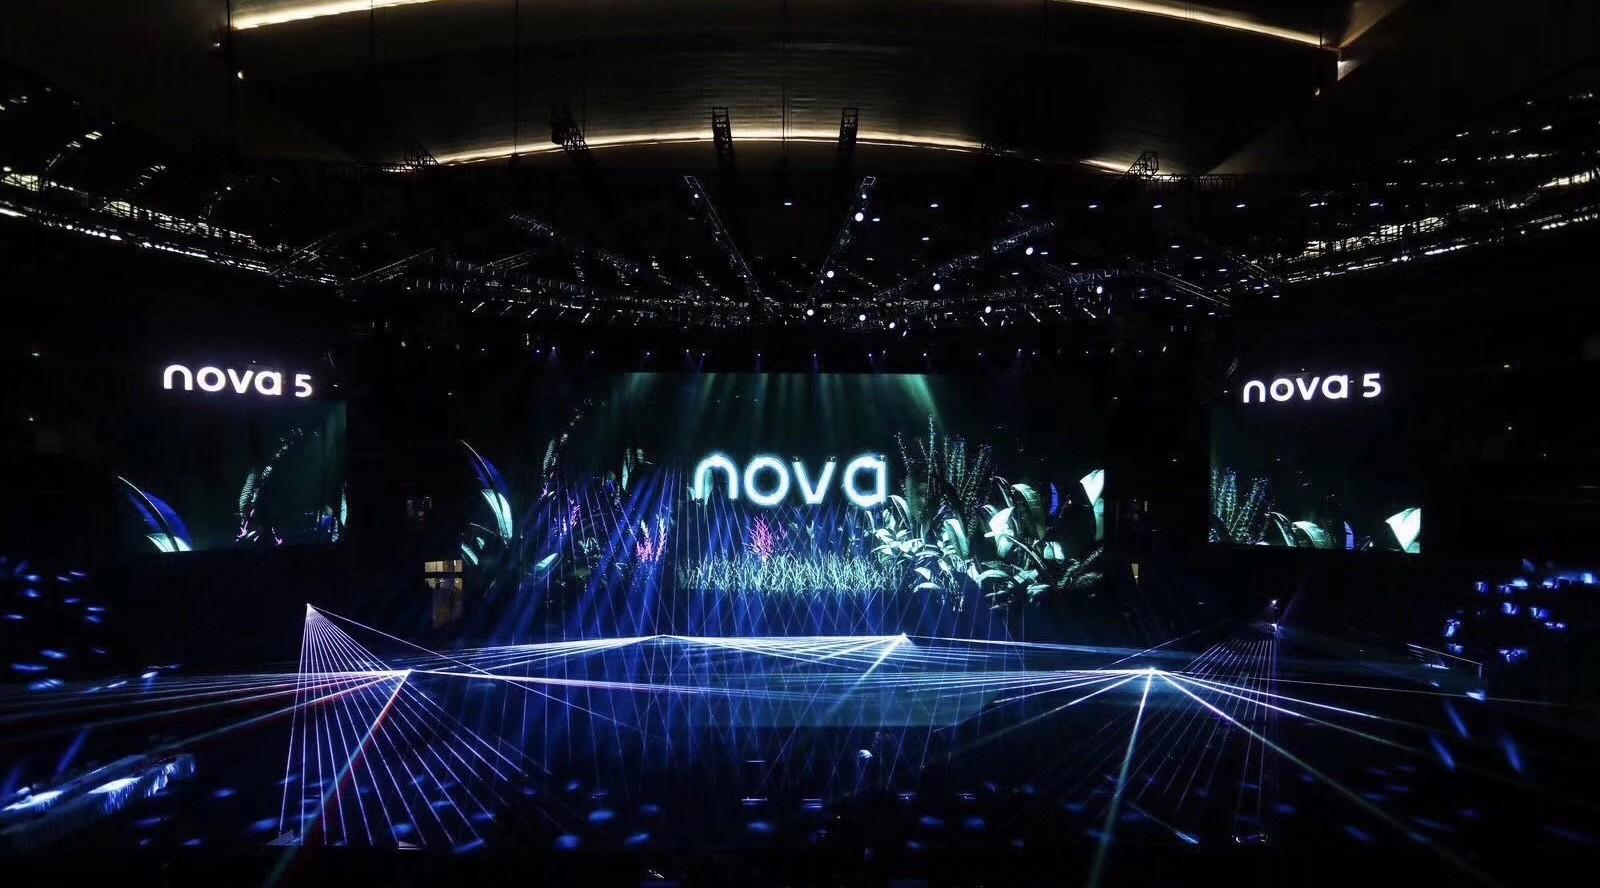 Nova5 opening video 秘夜之境